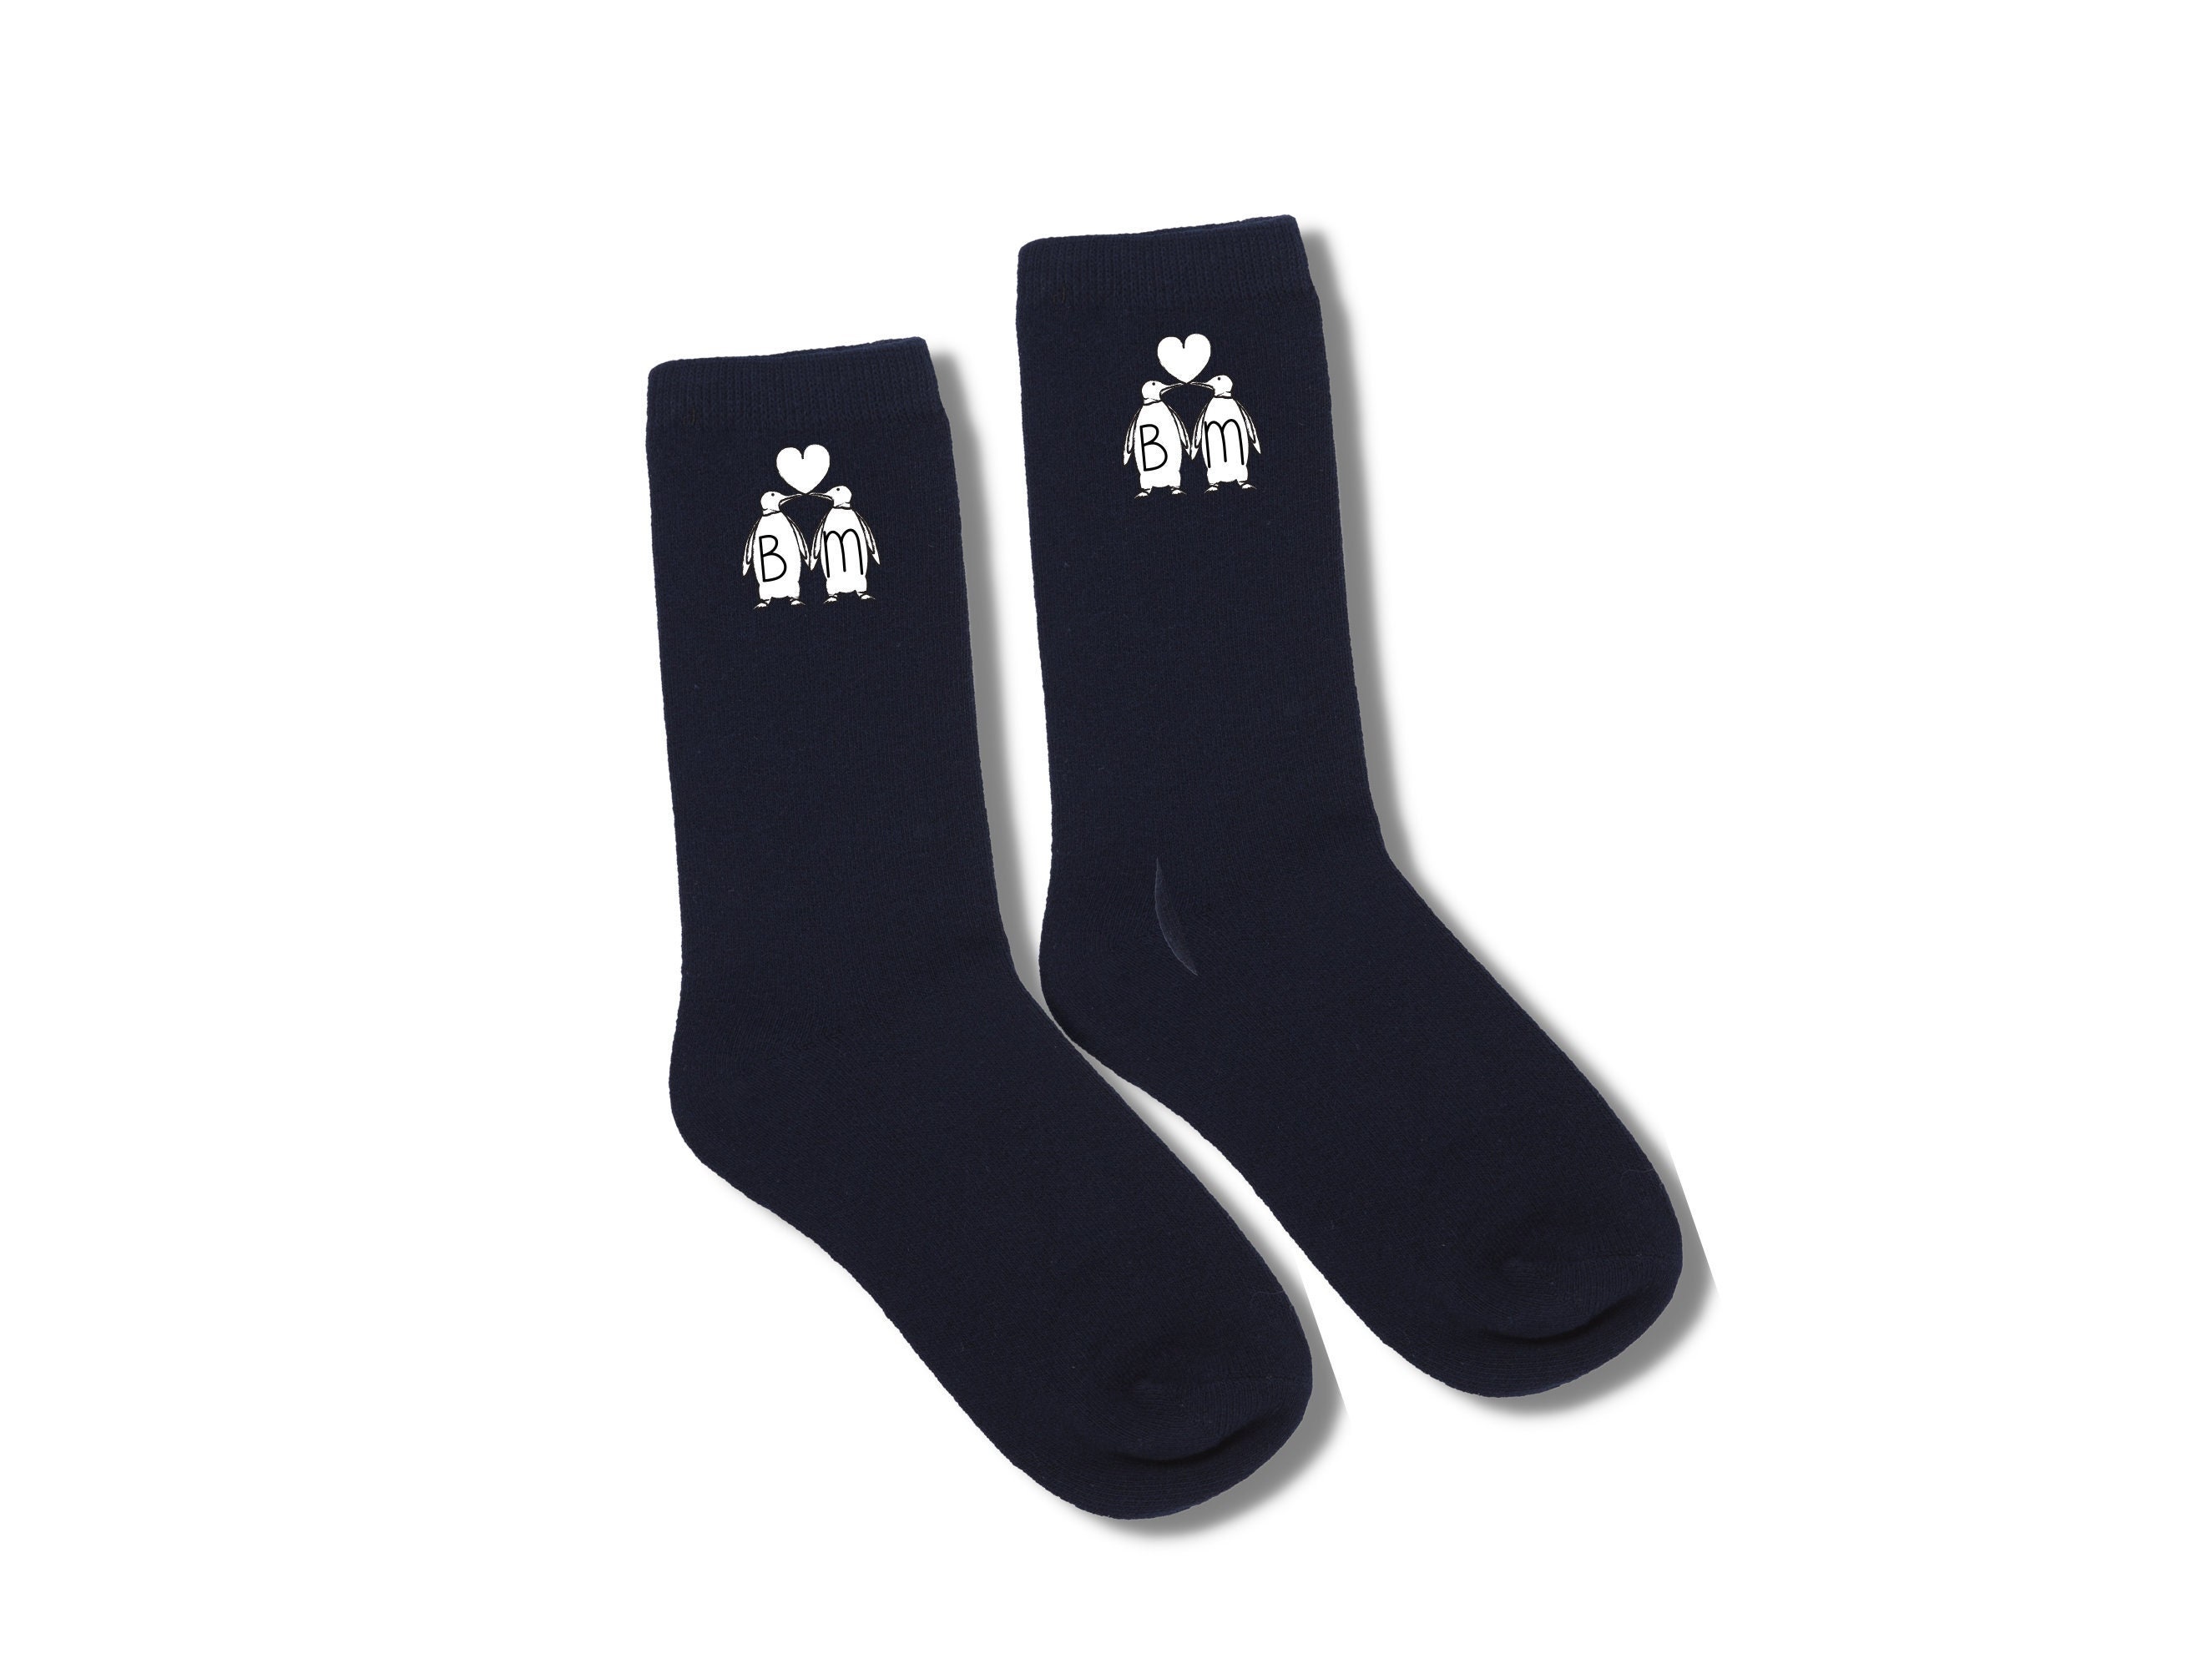 Initial Penguin Personalise Printed Socks Perfect Gift For Him Groom Valentines Birthday Custom Romantic